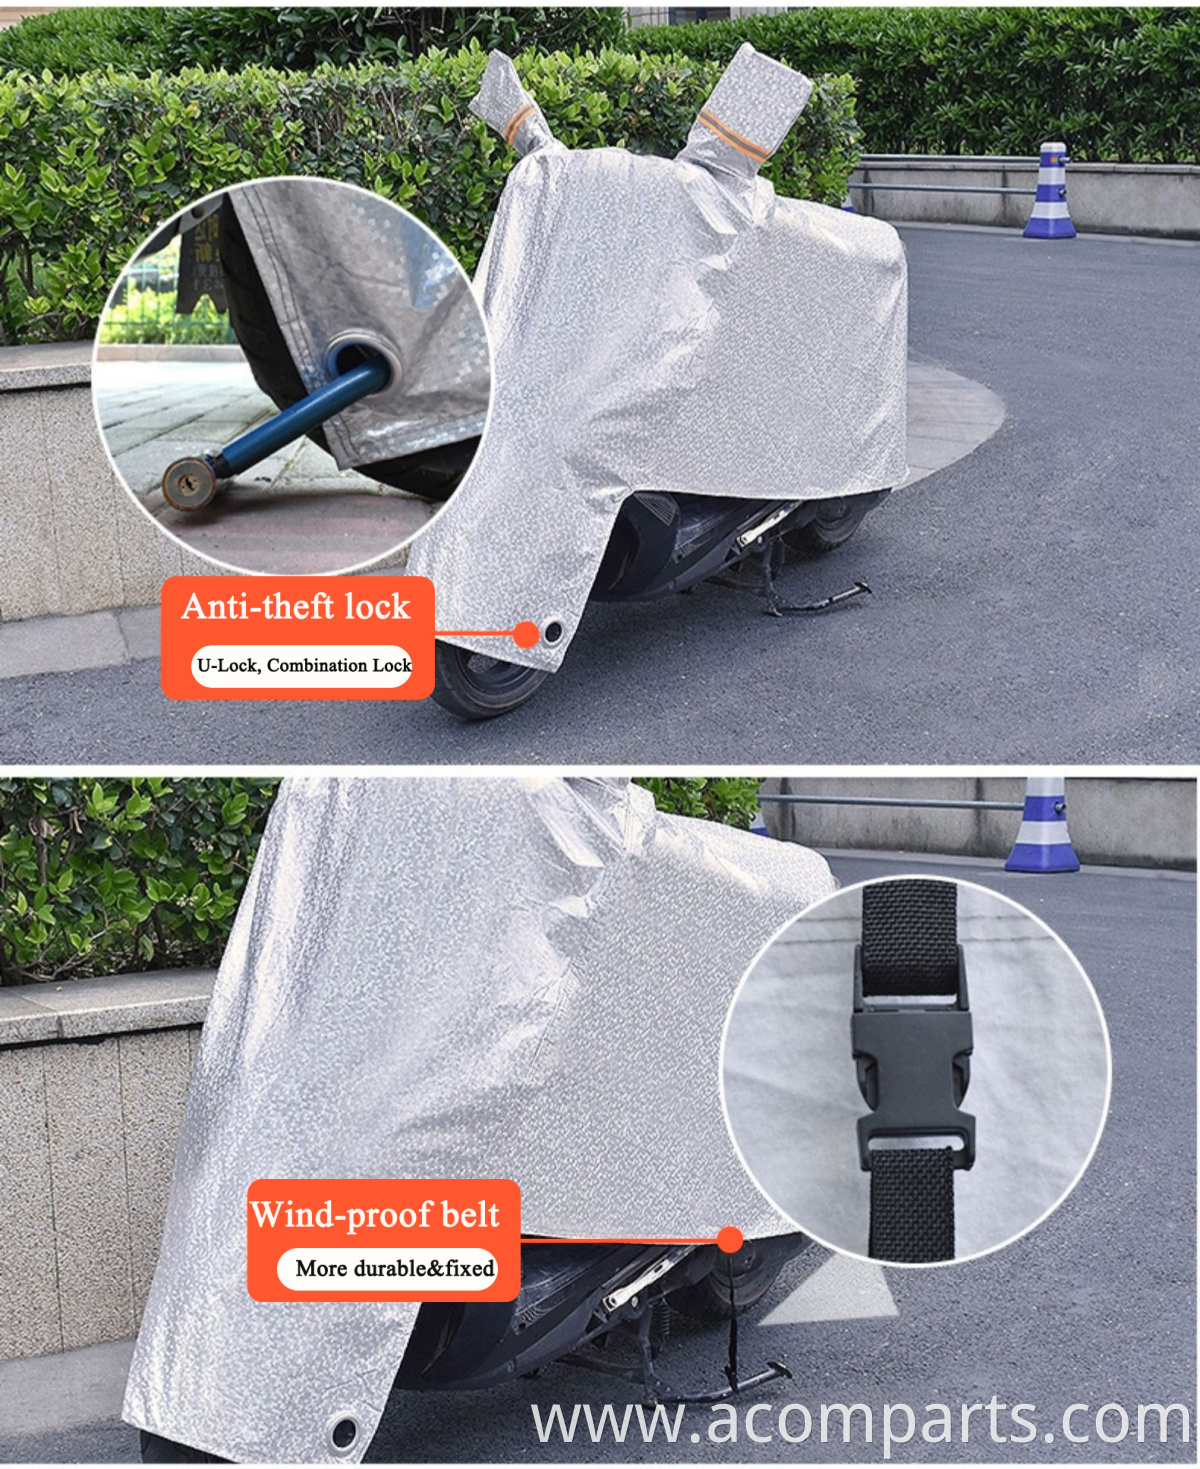 Outdoor parking storage anti-uv reflective stripes custom printed motorcycle covers waterproof